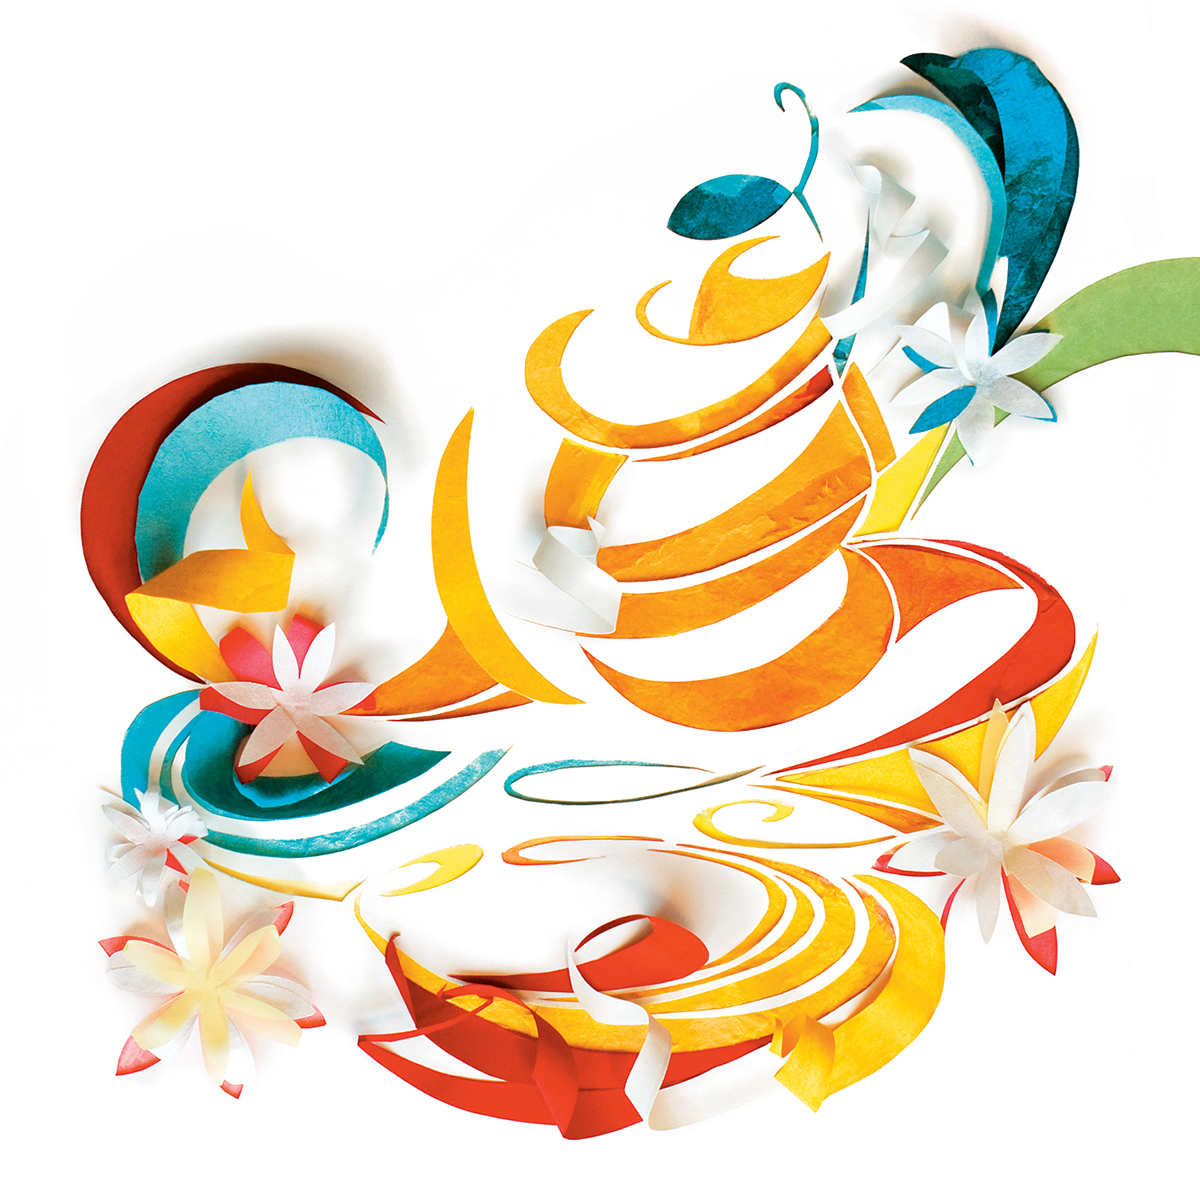  samba  art  paper  Colorful  brazil  playful  bright  craft vivid clean balance color cover Album artistic